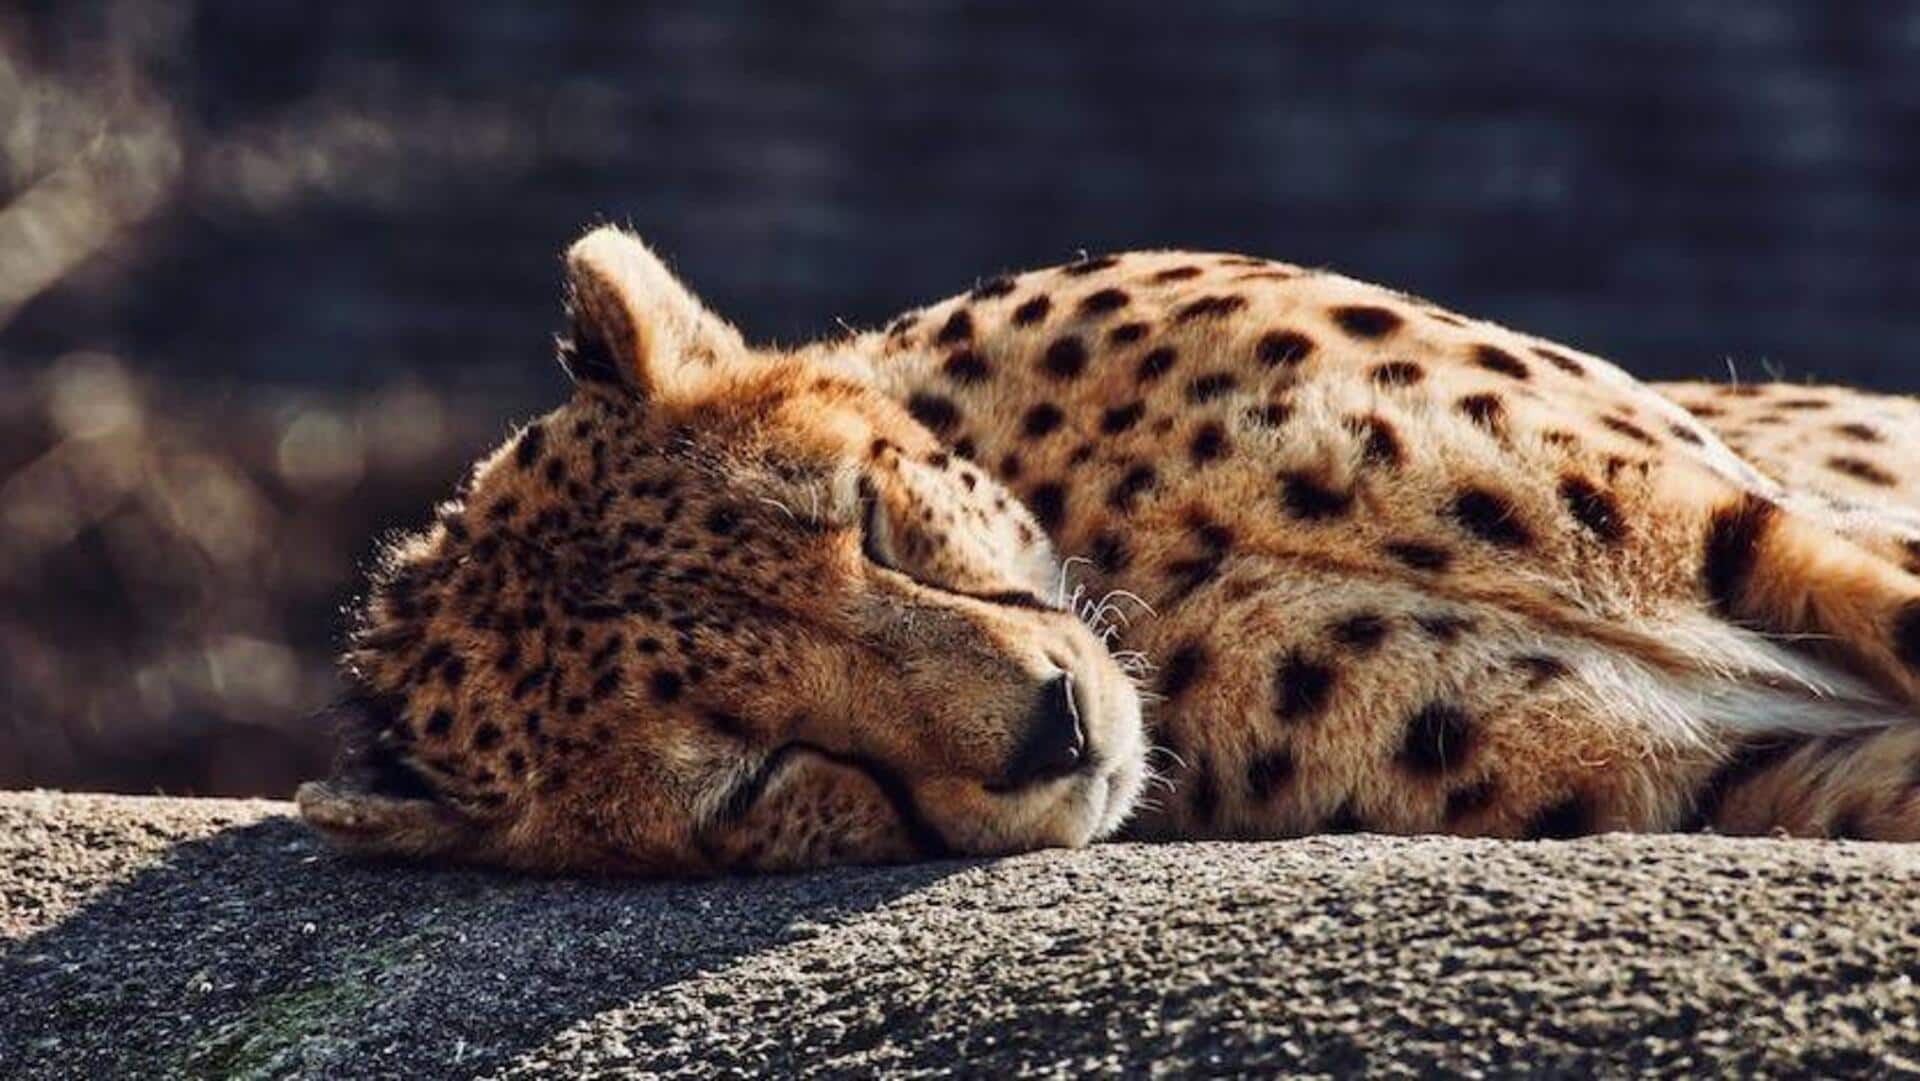 Female cheetah found dead at Kuno National Park